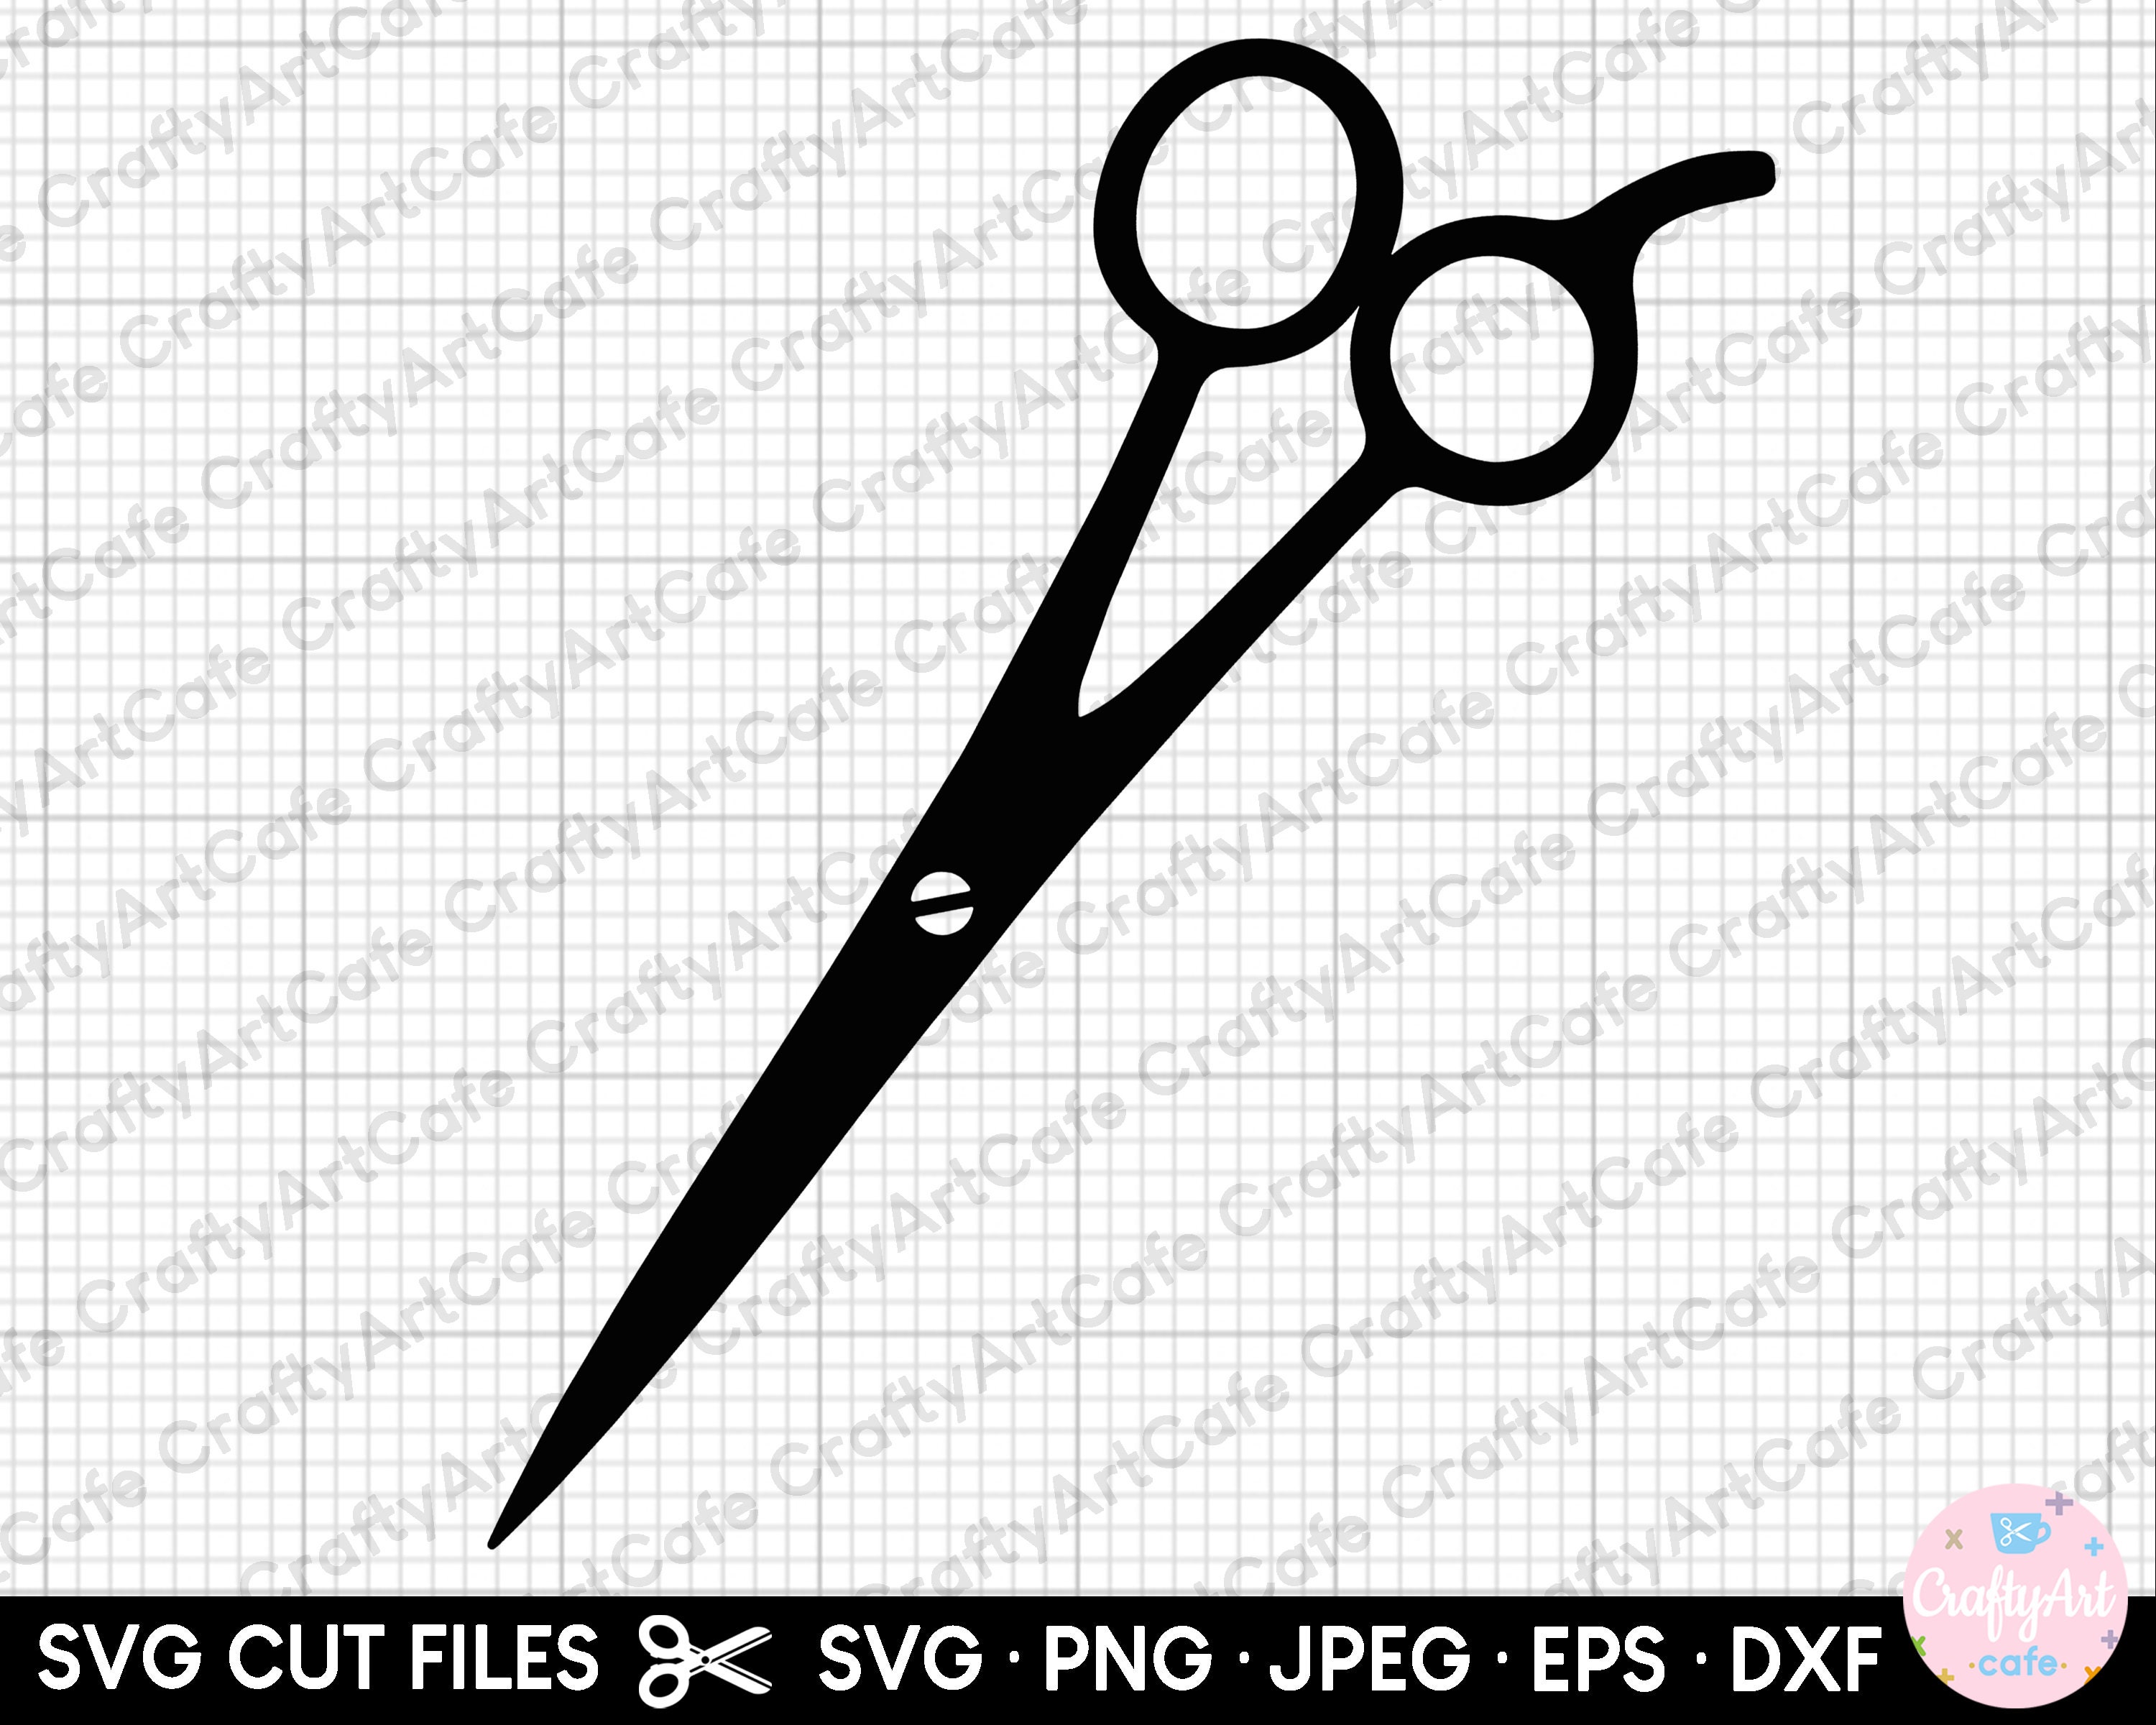 Cutting Hair Scissors Home Bathroom Sink Stock Photo 398210611